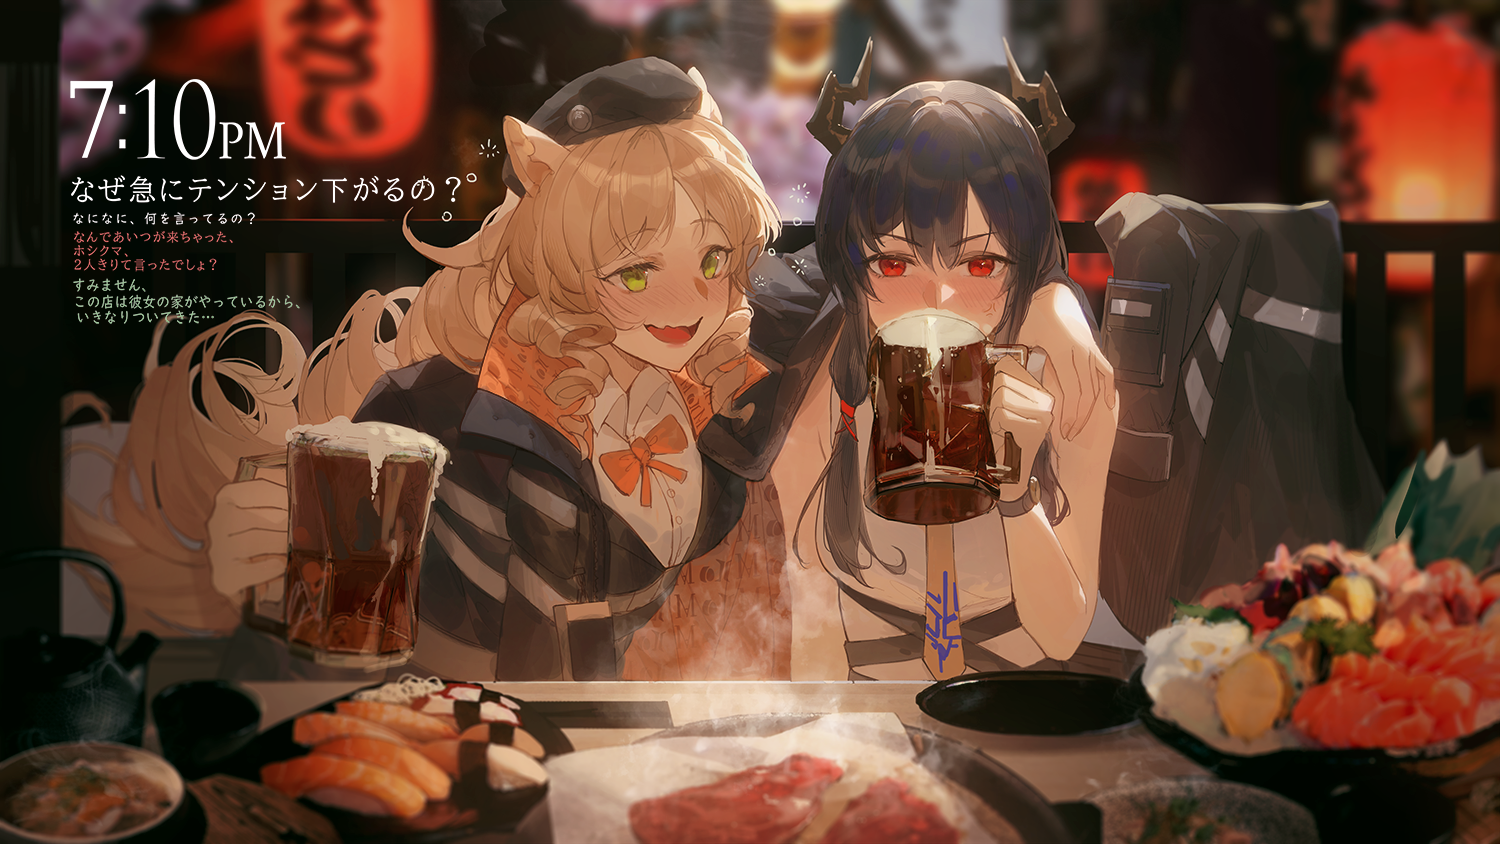 Kuroduki Anime Girls Beer Food Drinking Japanese Drunk Chen Arknights Swire Arknights Arknights 1500x844